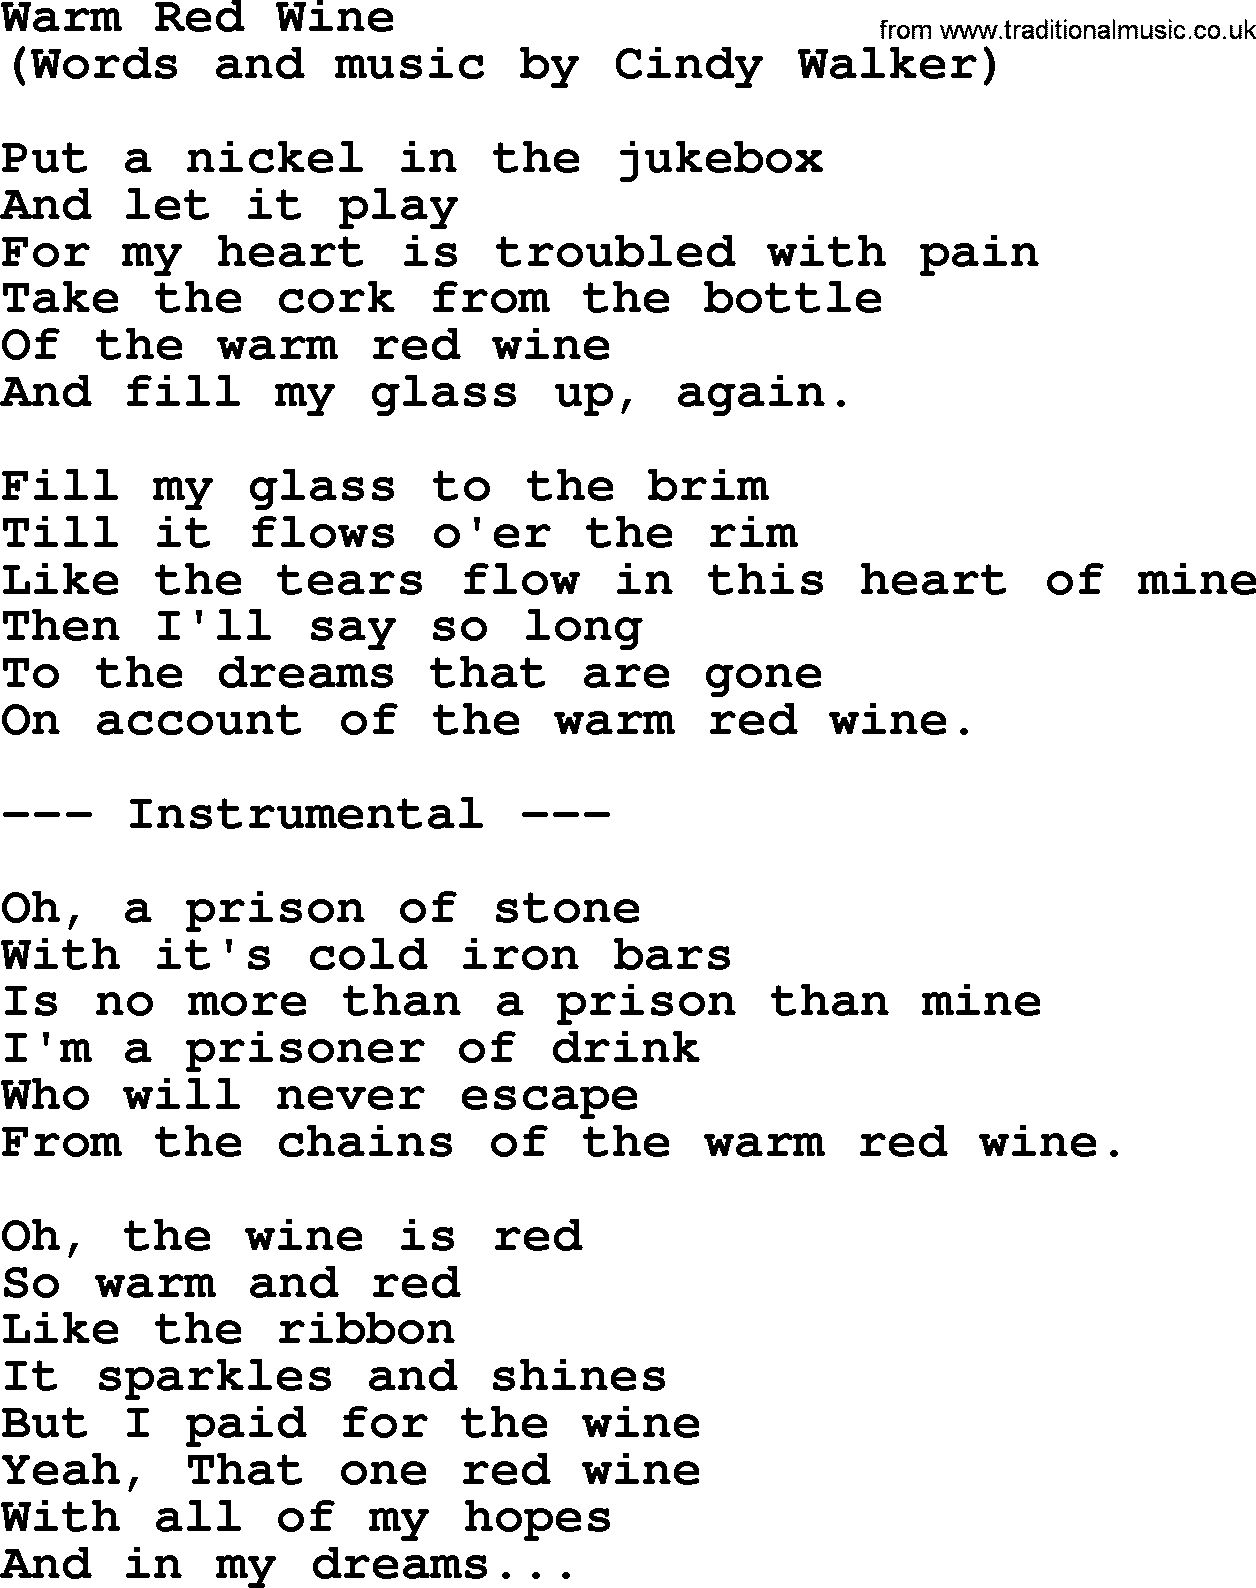 George Jones song: Warm Red Wine, lyrics